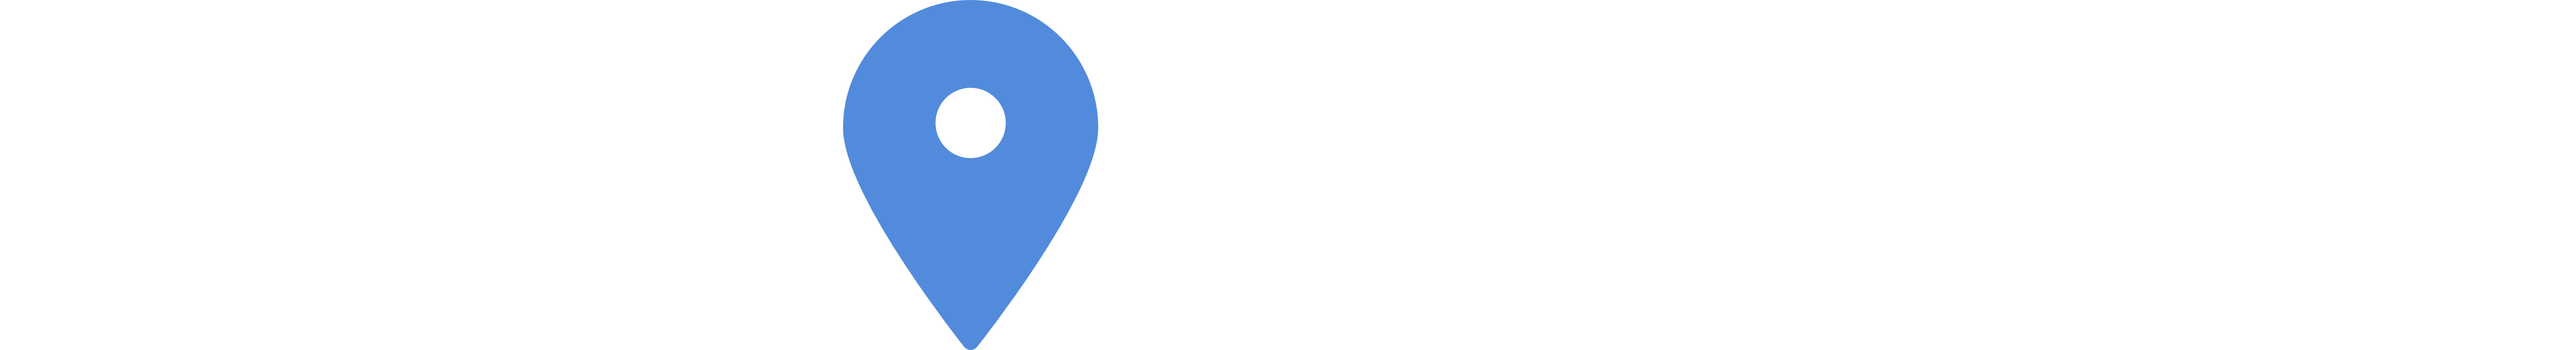 AI Localism logo